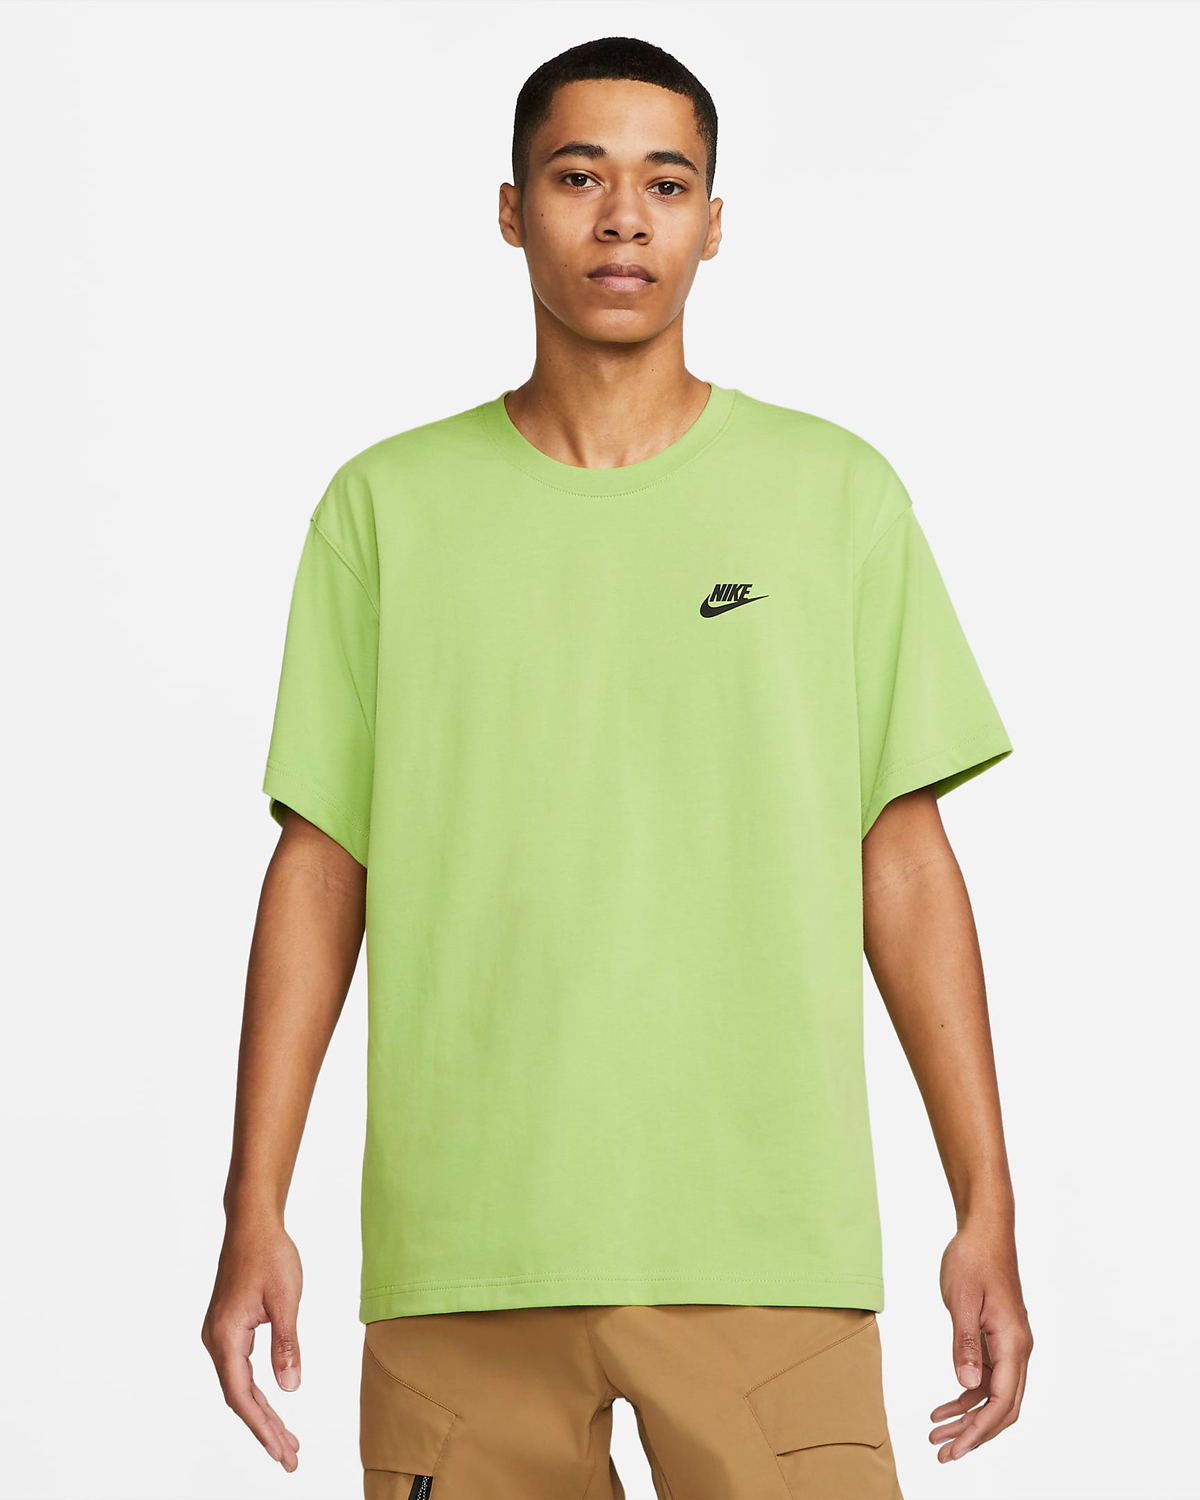 nike-vivid-green-t-shirt